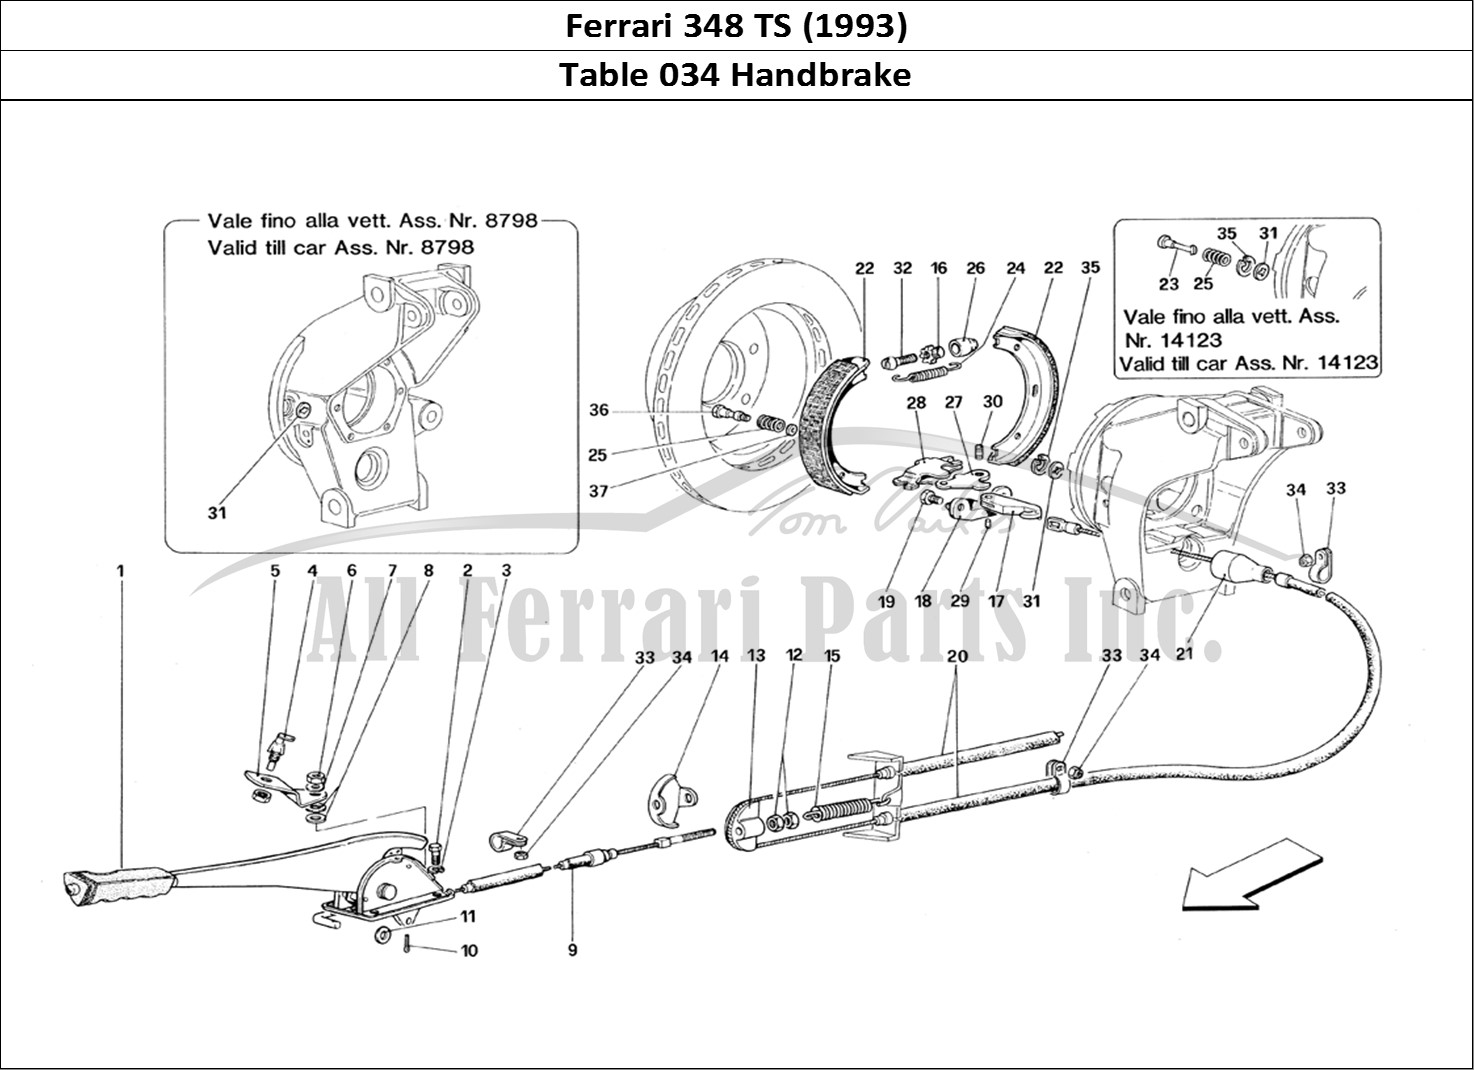 Ferrari Parts Ferrari 348 TB (1993) Page 034 Hand-Brake Control